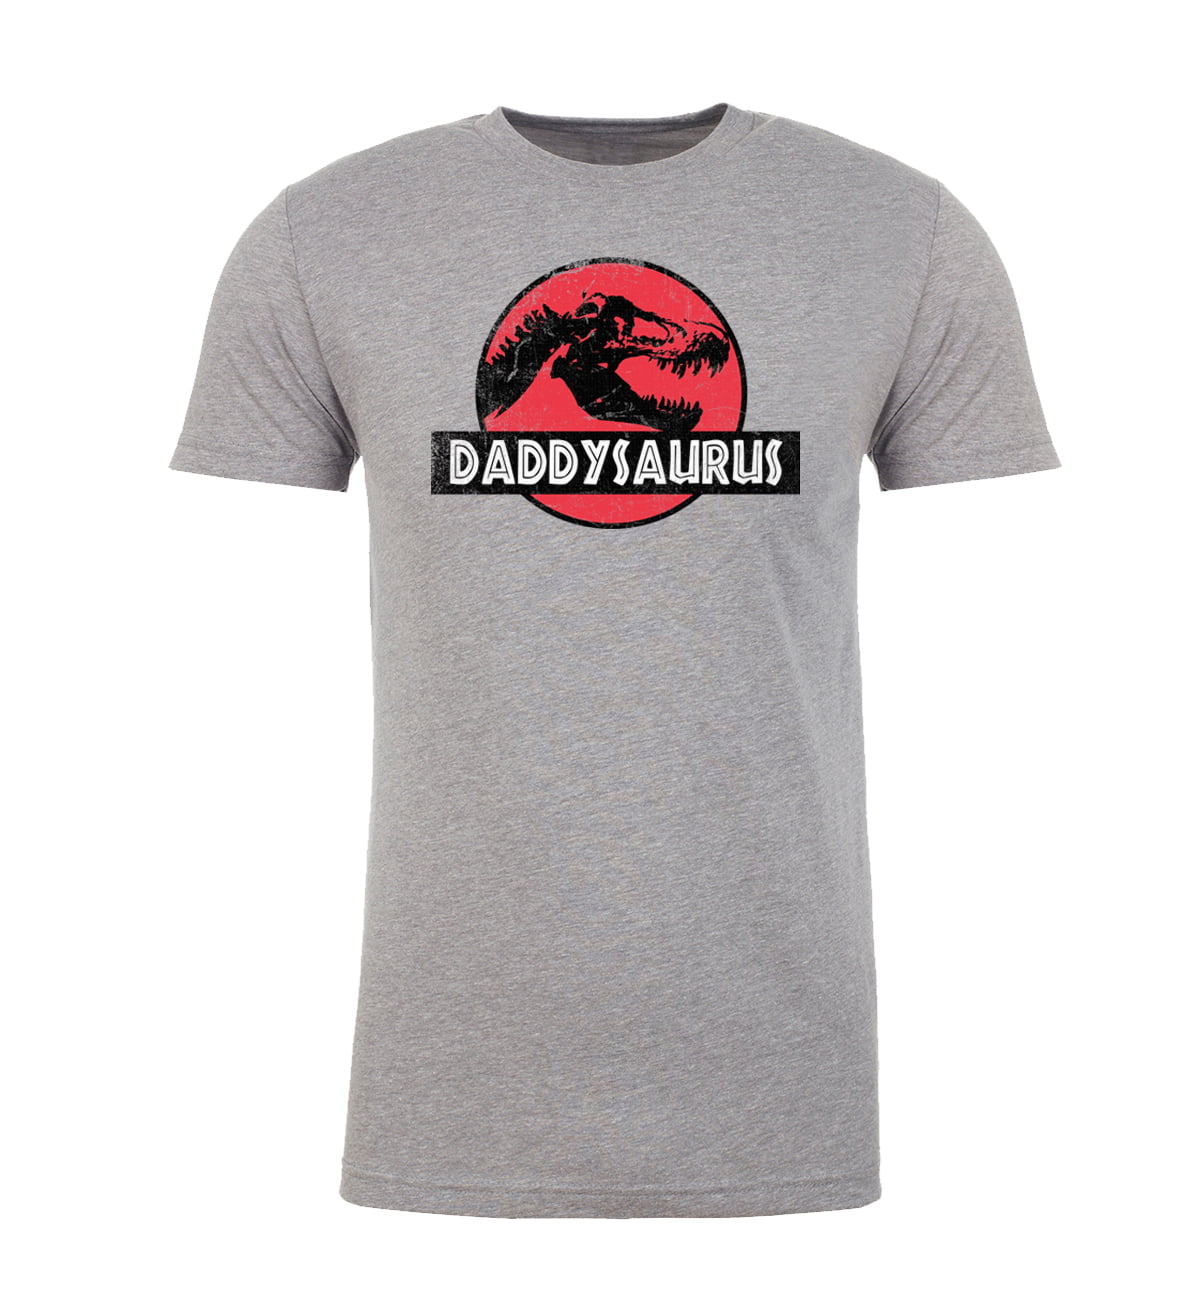 Daddysaurus Dad Shirts, Graphic T-shirts Men - Heather Grey MH200DAD S24 4XL - Walmart.com